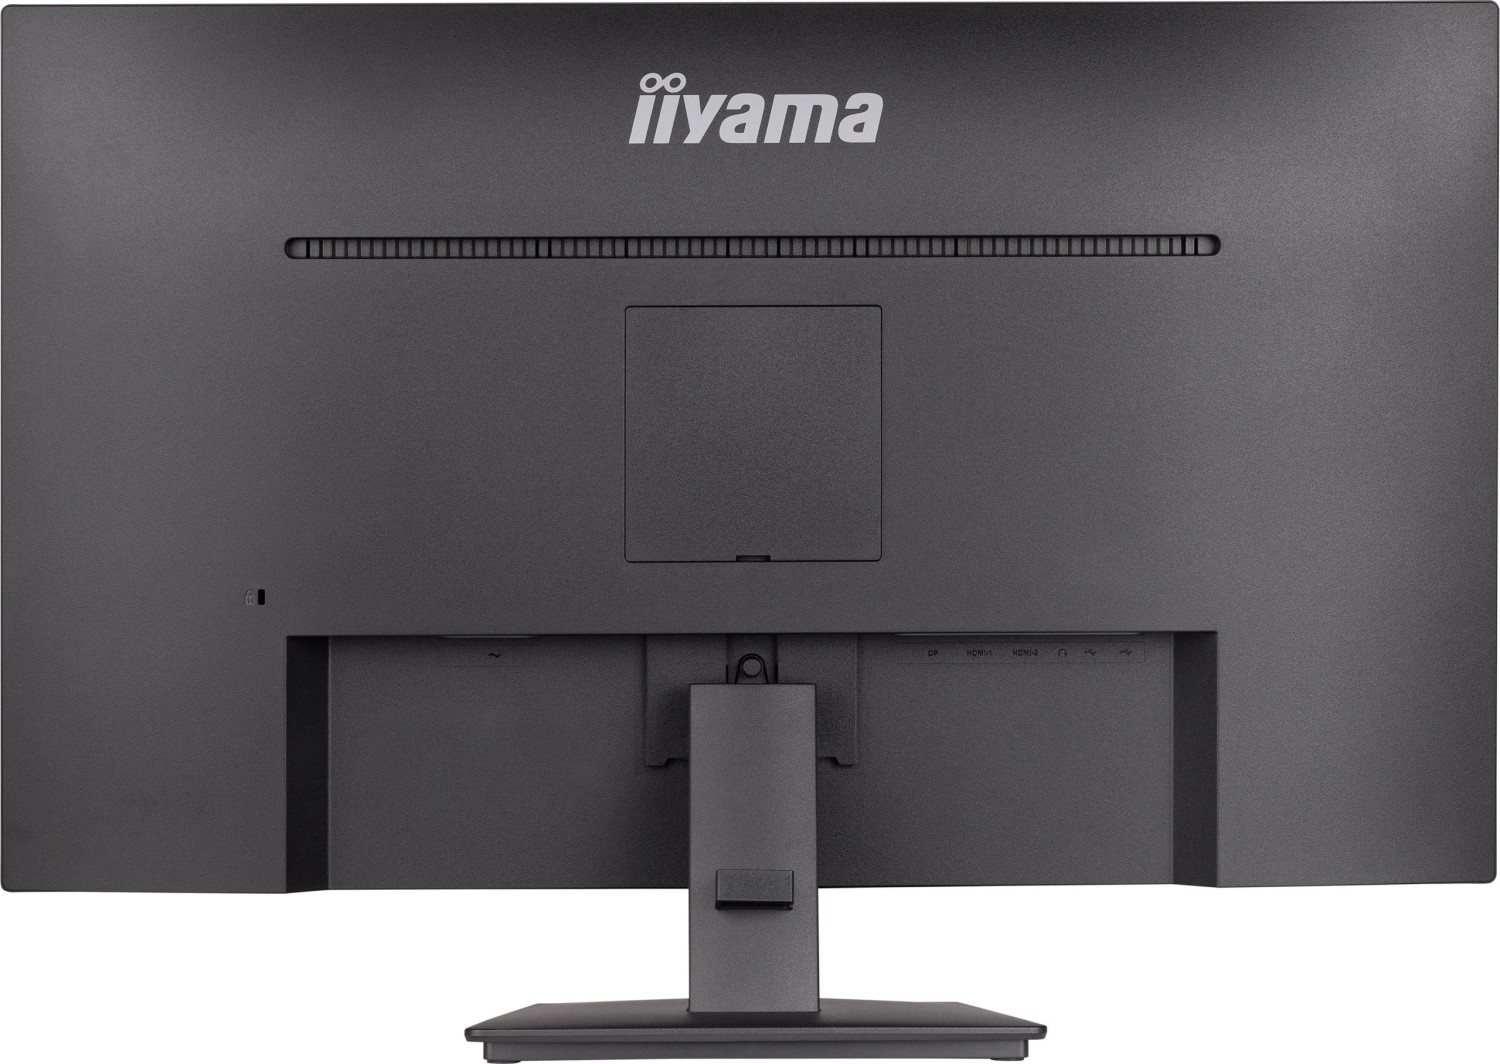 Iiyama ProLite XU3294QSU-B1 LED-Monitor, 80cm (31.5"), schwarz TFT Monitor, 16:9, 80cm (31.5"), Auflösung: 2560x1440 Pixel, VESA Mount, verstellbarer Standfuß, 4ms, Helligkeit: 250cd, Blickwinkel: 178/178°(H/V), Kontrast: 3000:1, Anschluß: USB (2x, Host), Audio, Display-Port, HDMI, inkl.: Kabel (USB, HDMI, Display Port), Netzteil, Netzkabel (EU, UK), Farbe: schwarz [Energieklasse G] (XU3294QSU-B1)